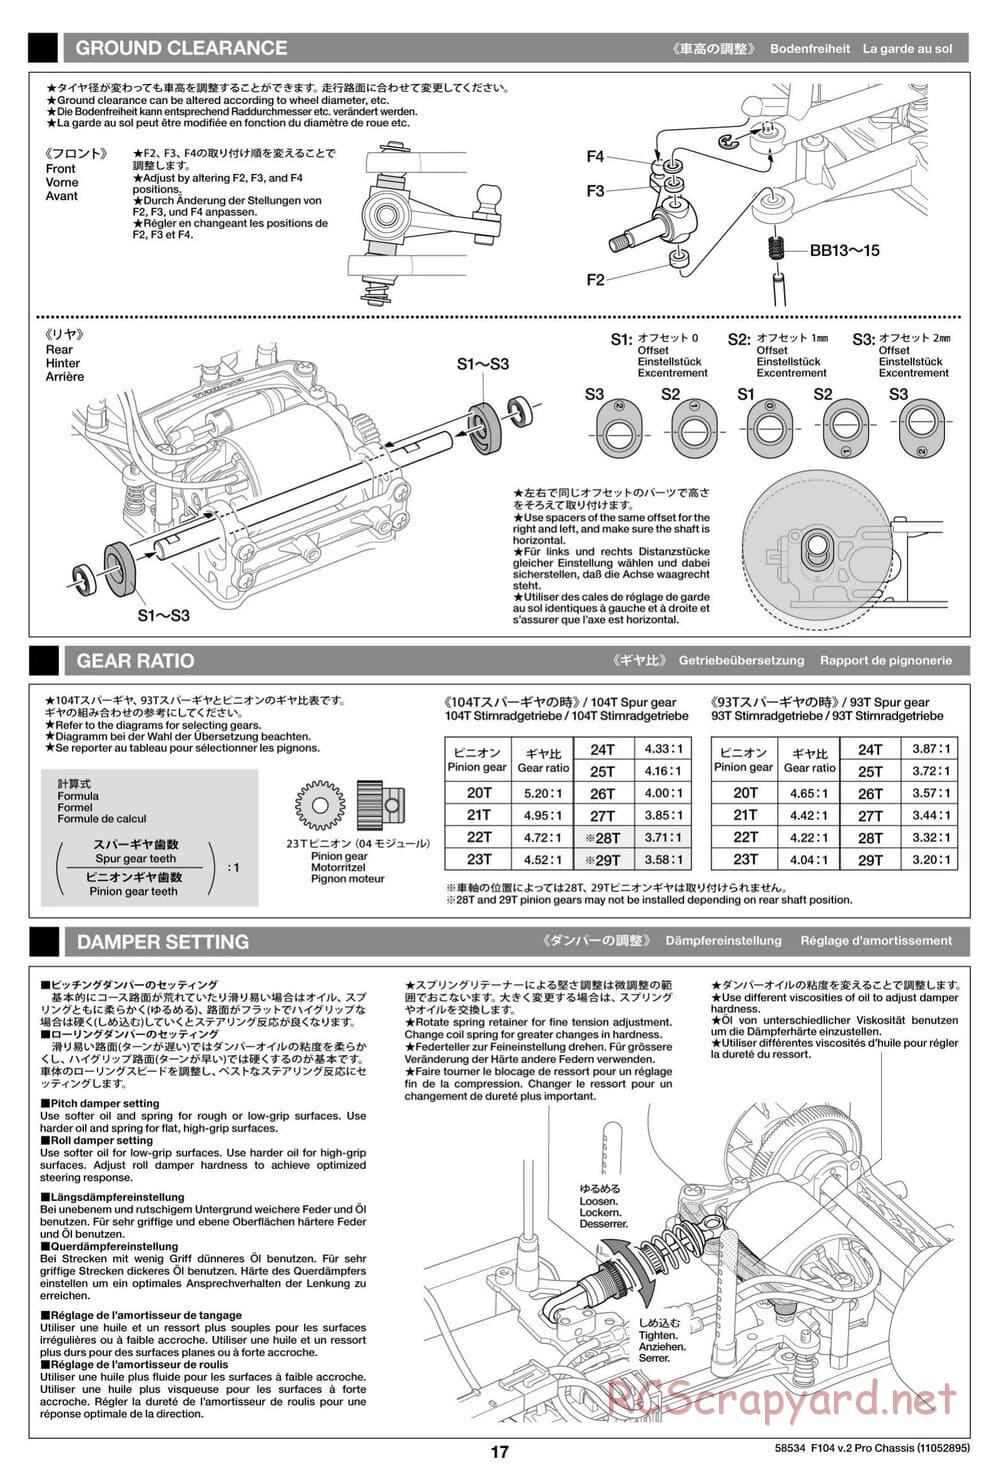 Tamiya - F104 Ver.II PRO Chassis - Manual - Page 17